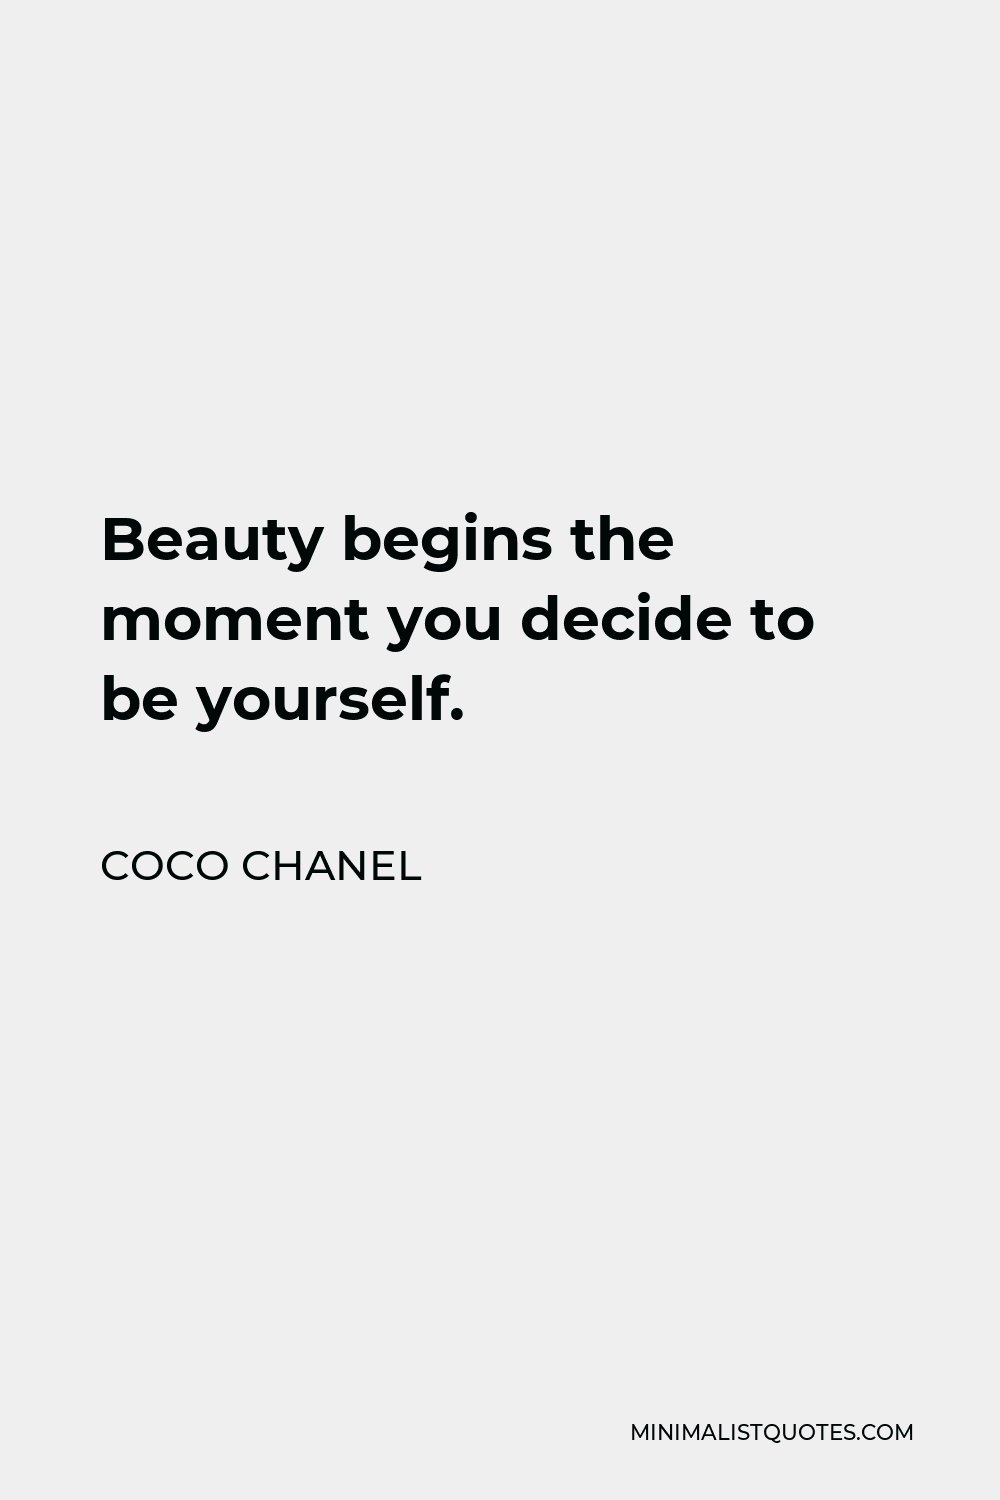 Coco Chanel Quotes to Read  thatgirlArlene